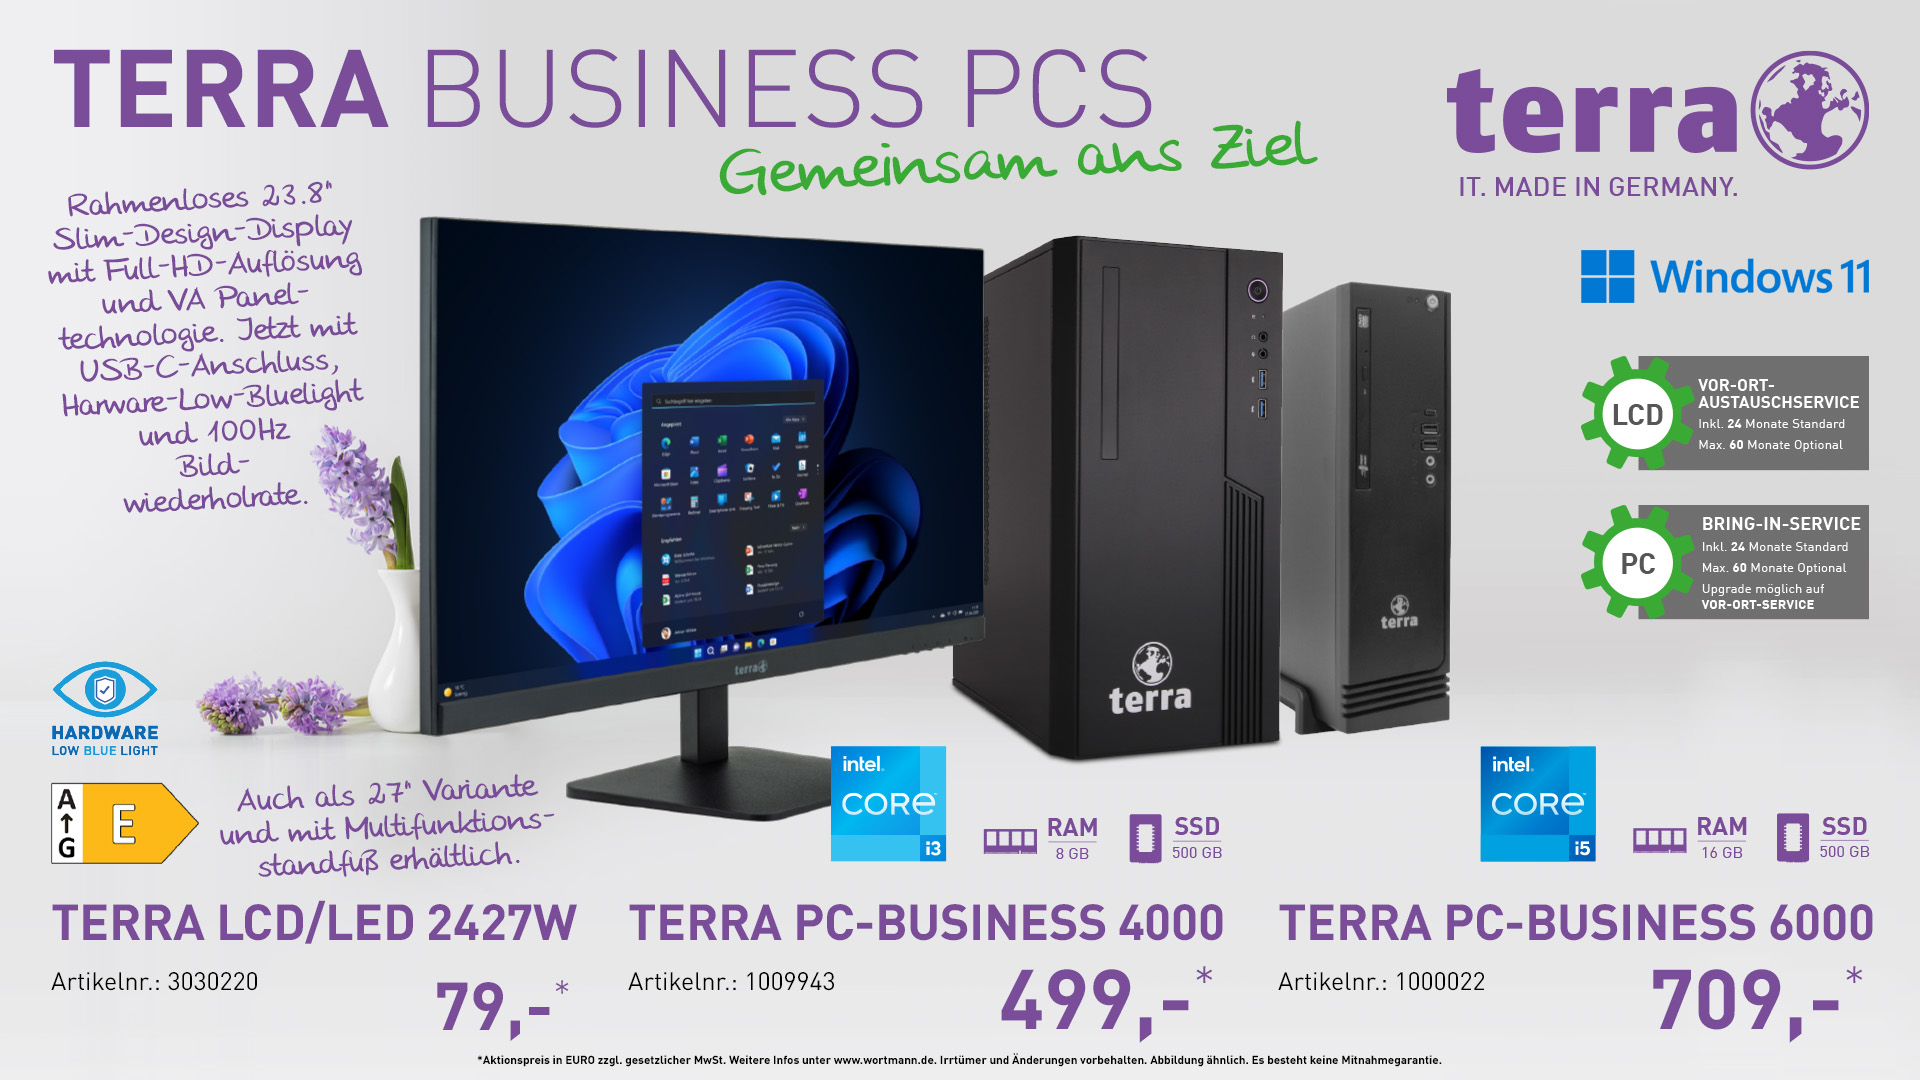 Terra LCD/LED 2427W, Terra PC-Business 4000, Terra PC-Business 6000